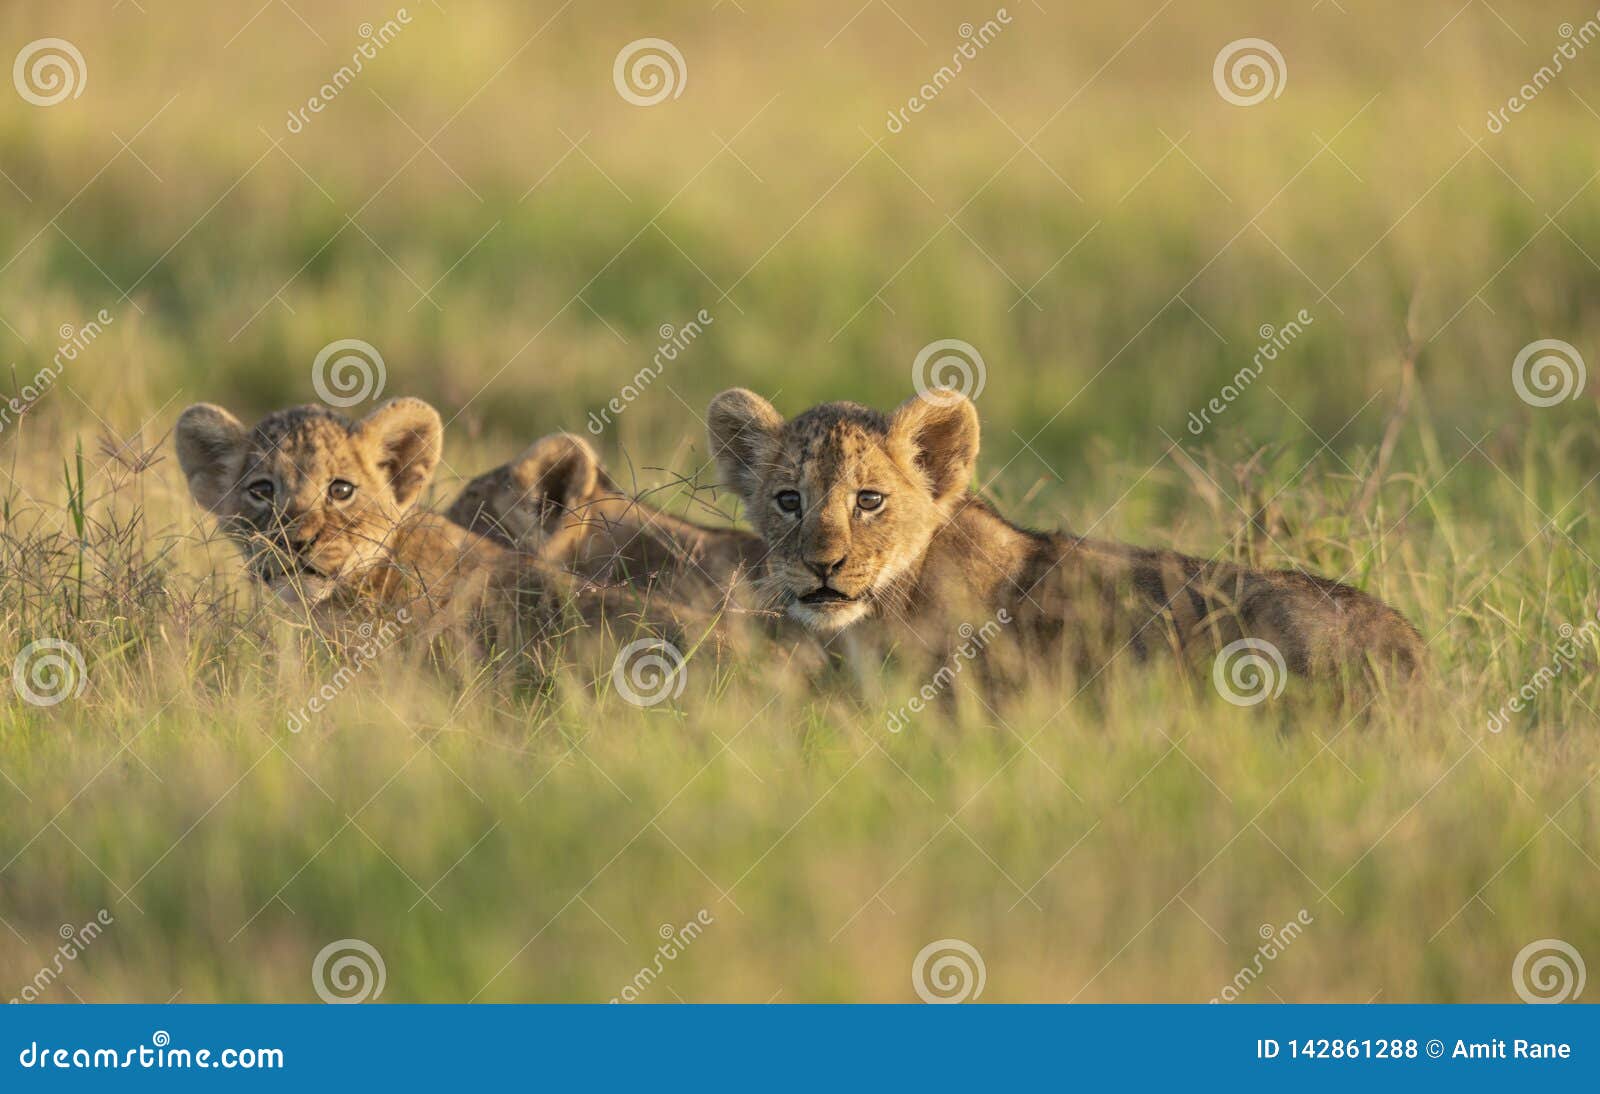 cute lion cubs at amboseli national park,kenya